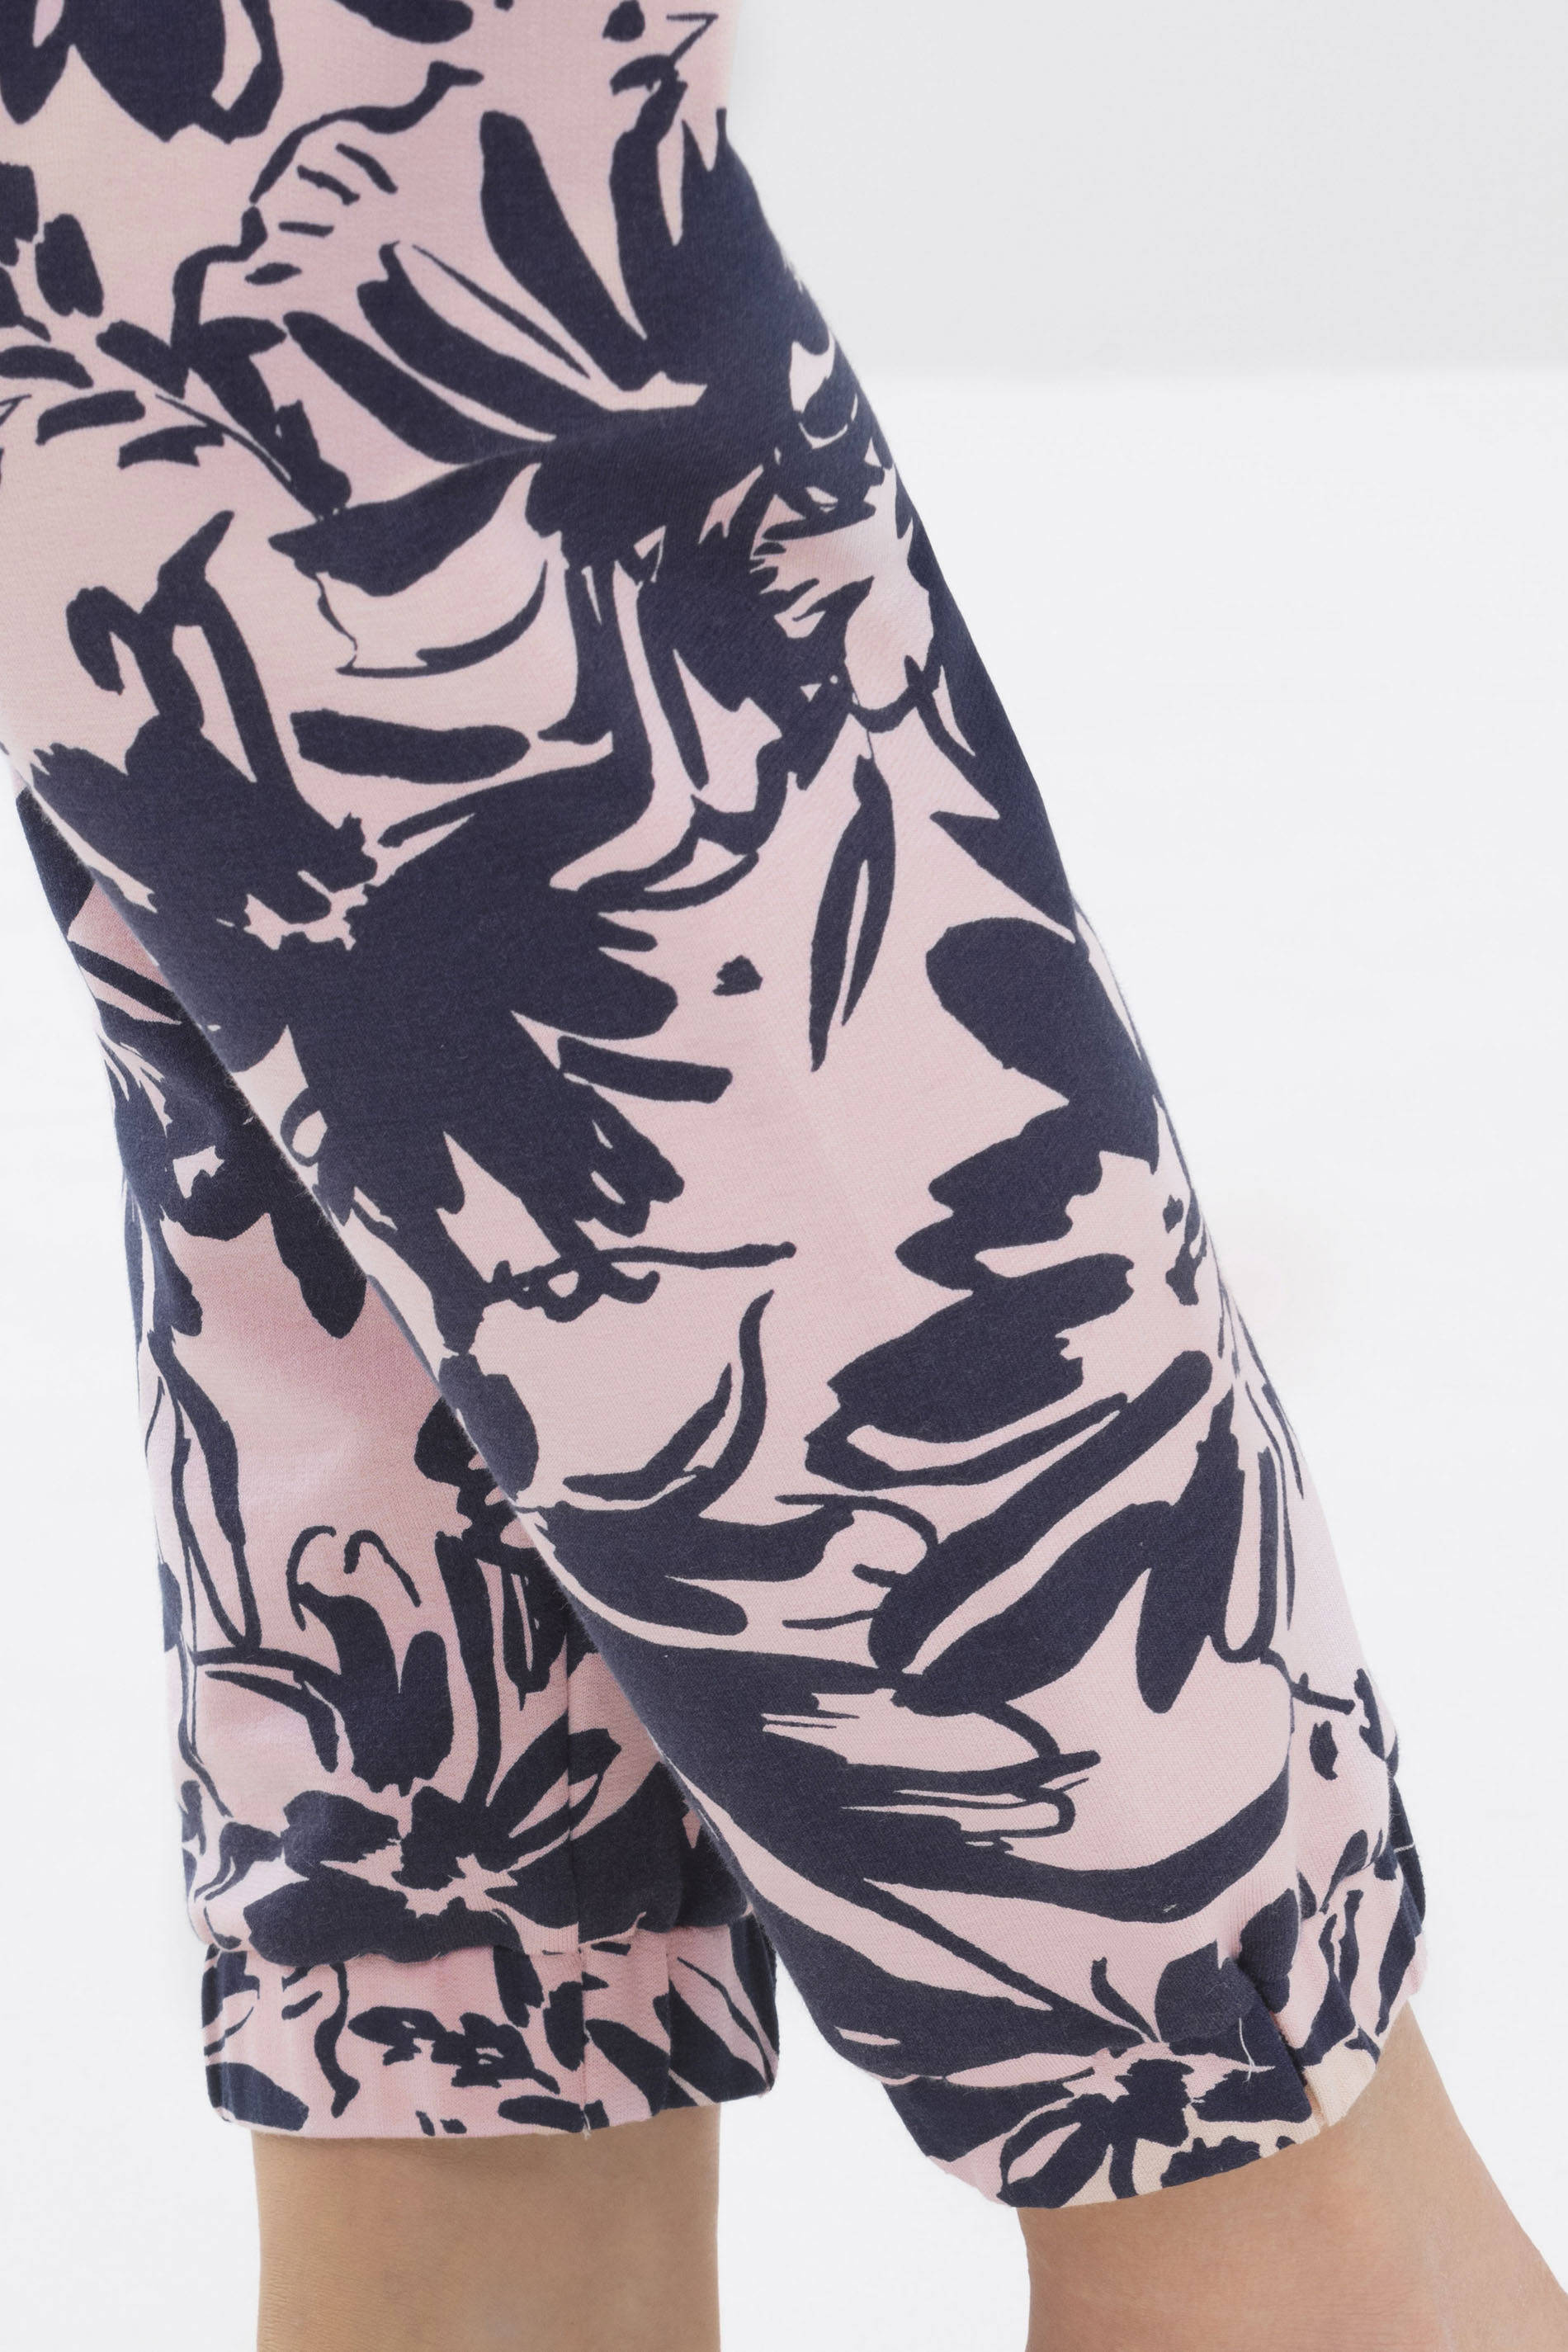 Pyjama Blossom Serie Wilma Detailansicht 02 | mey®